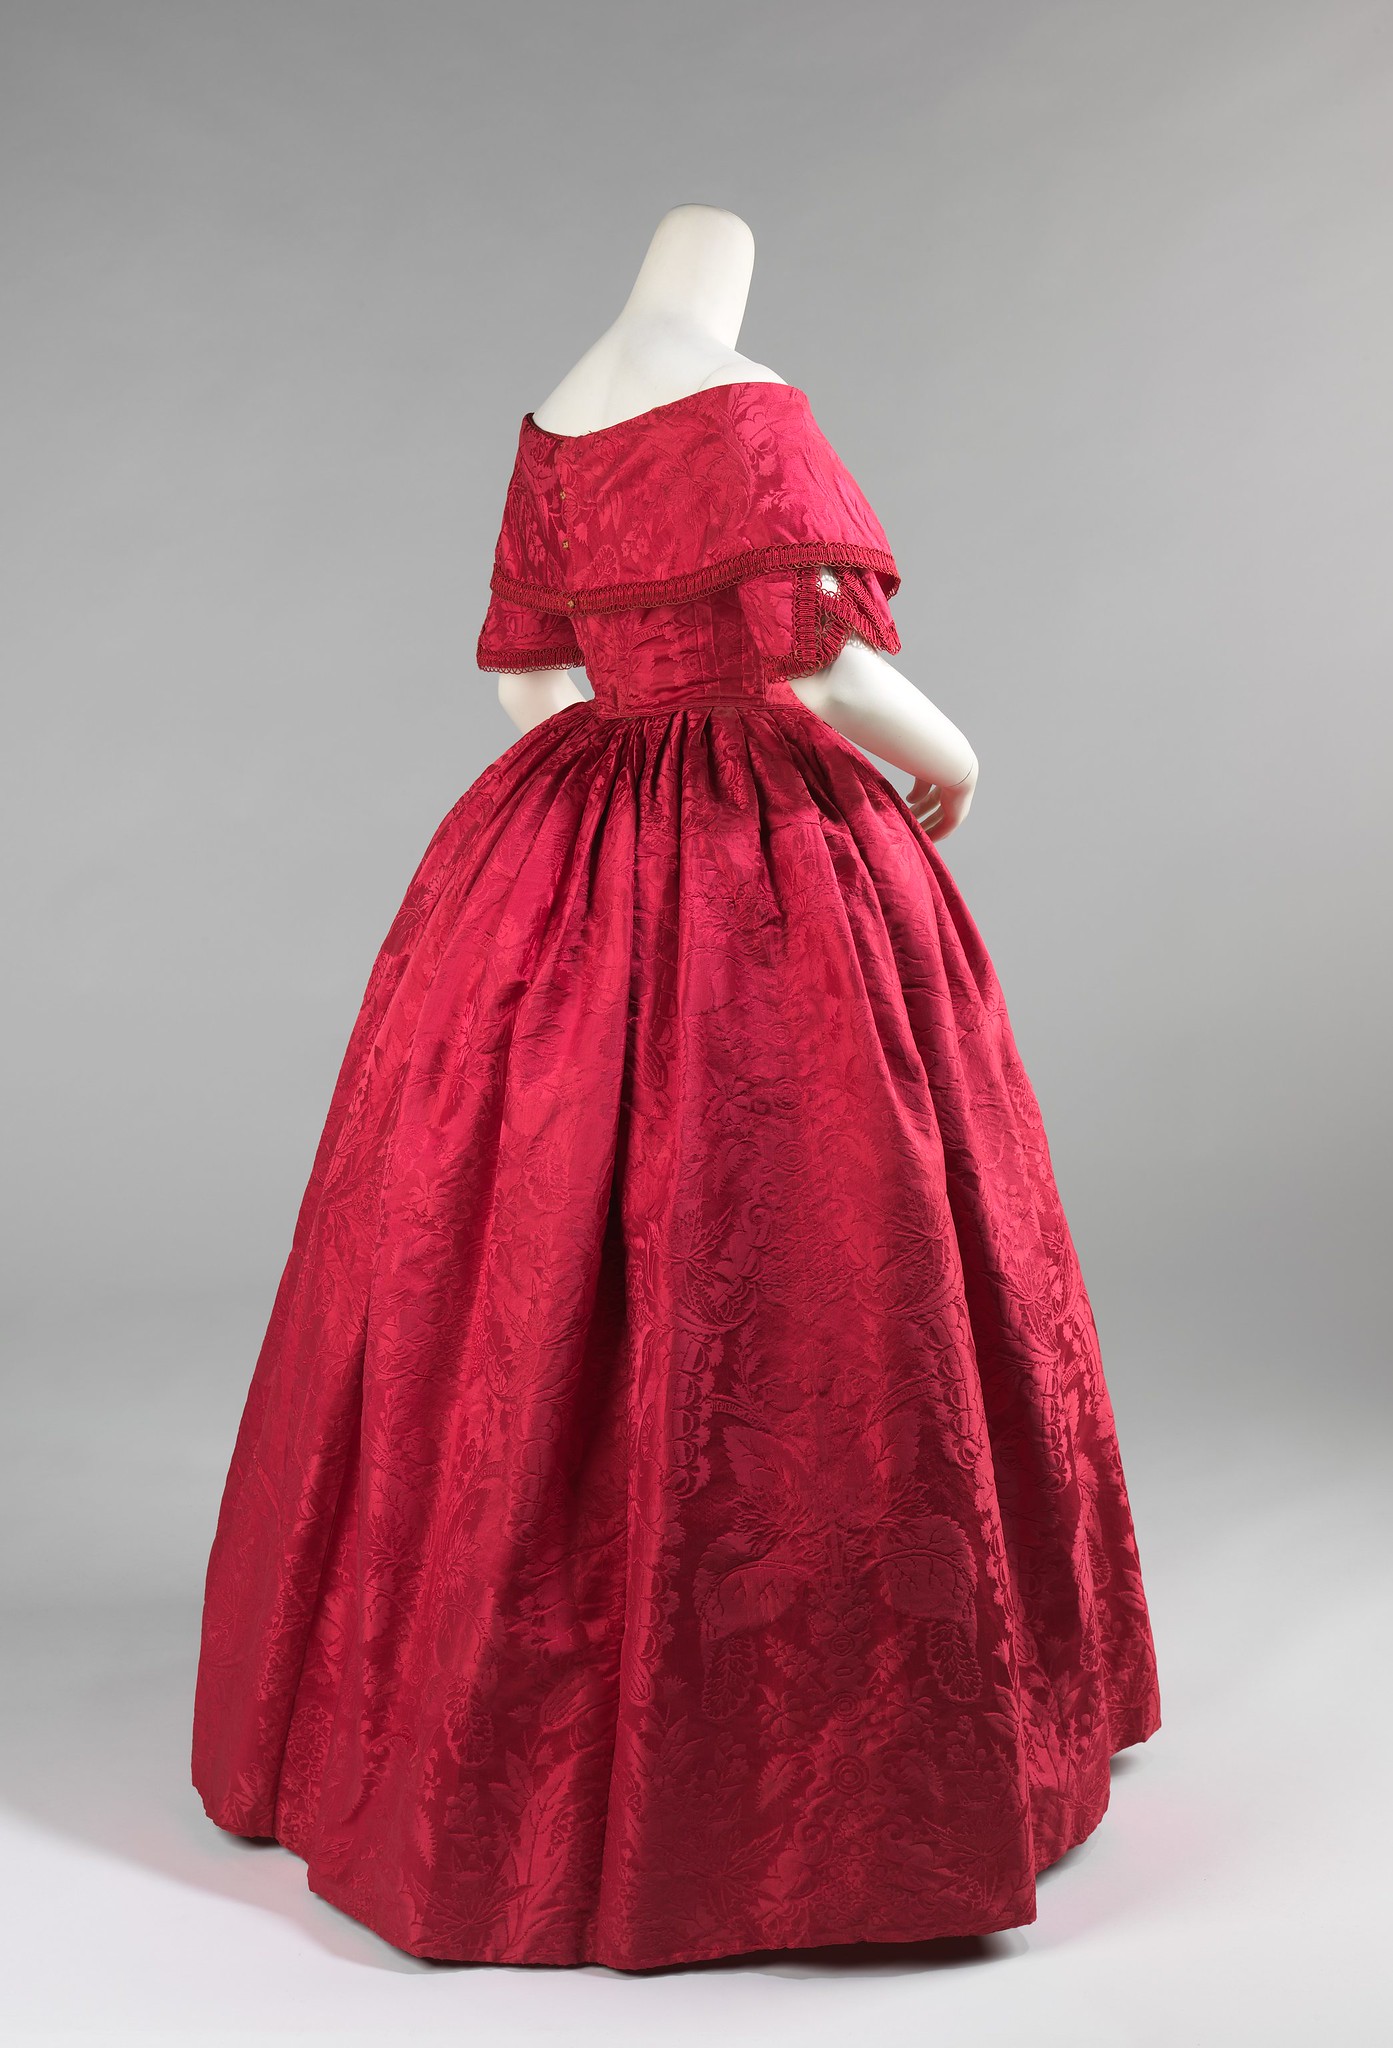 1842 Ball gown. British. Silk, cotton. metmuseum